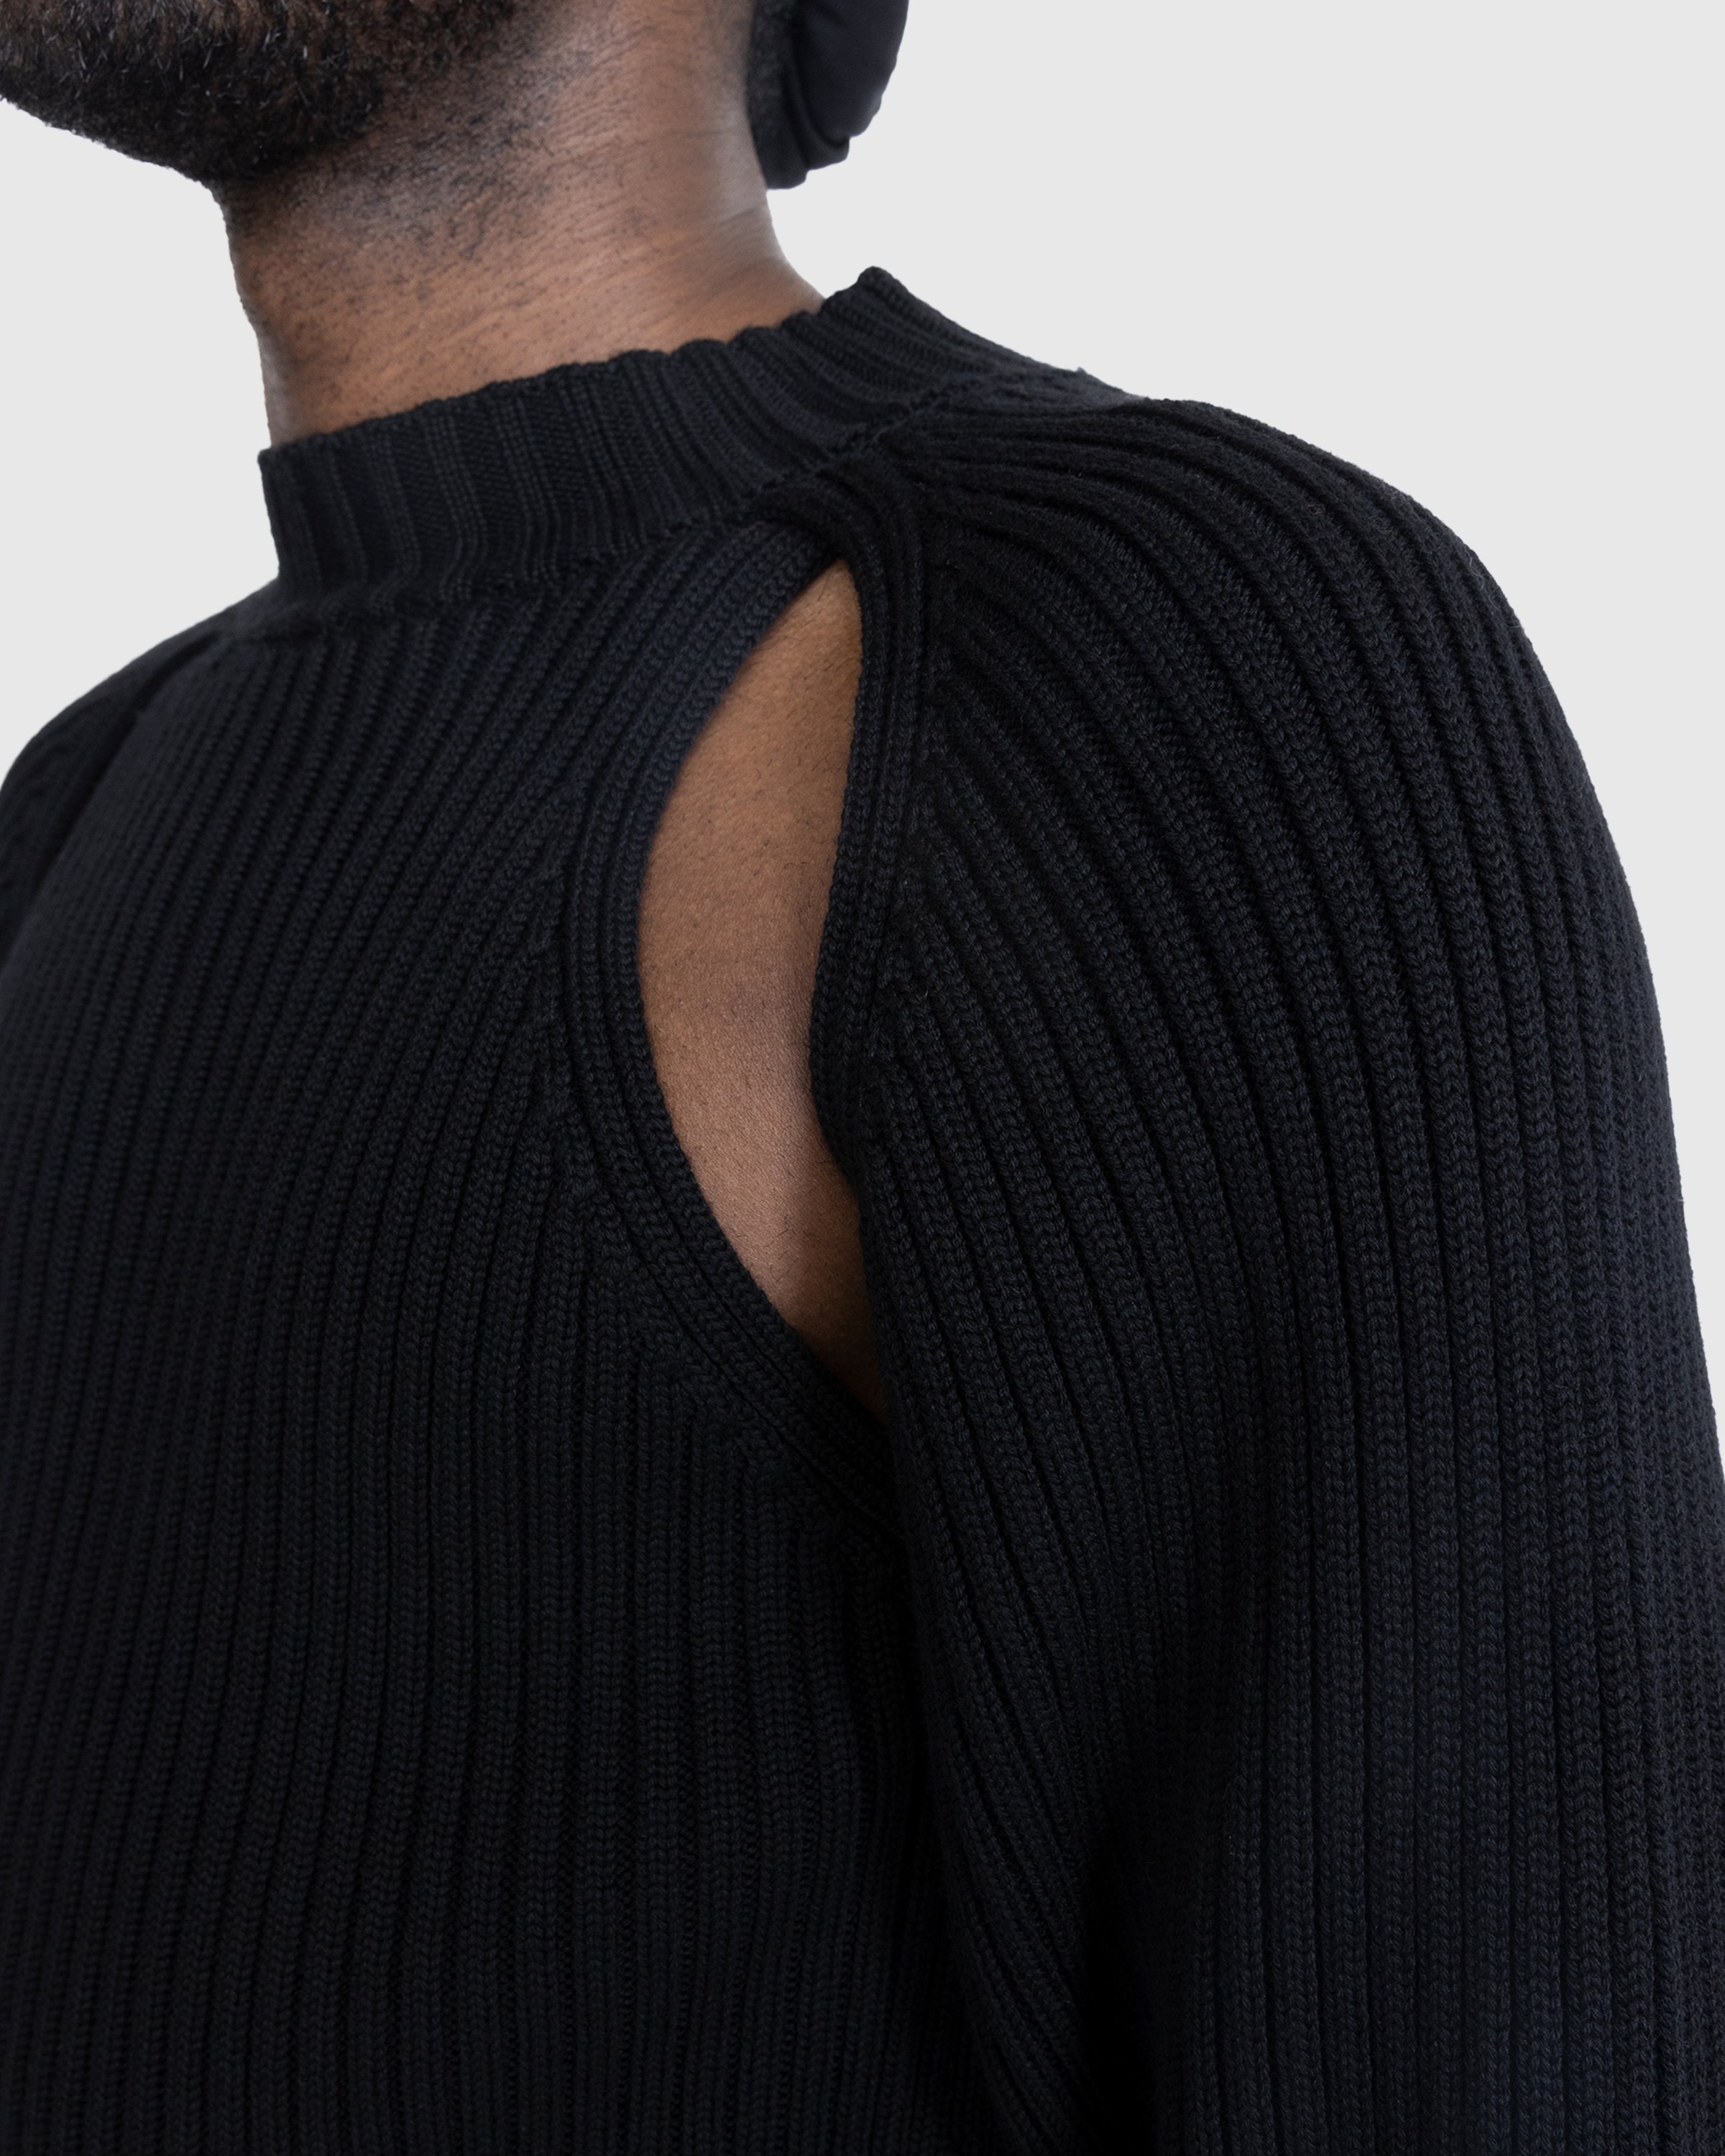 Jean Paul Gaultier - Oversized Sweater - Clothing - Black - Image 5